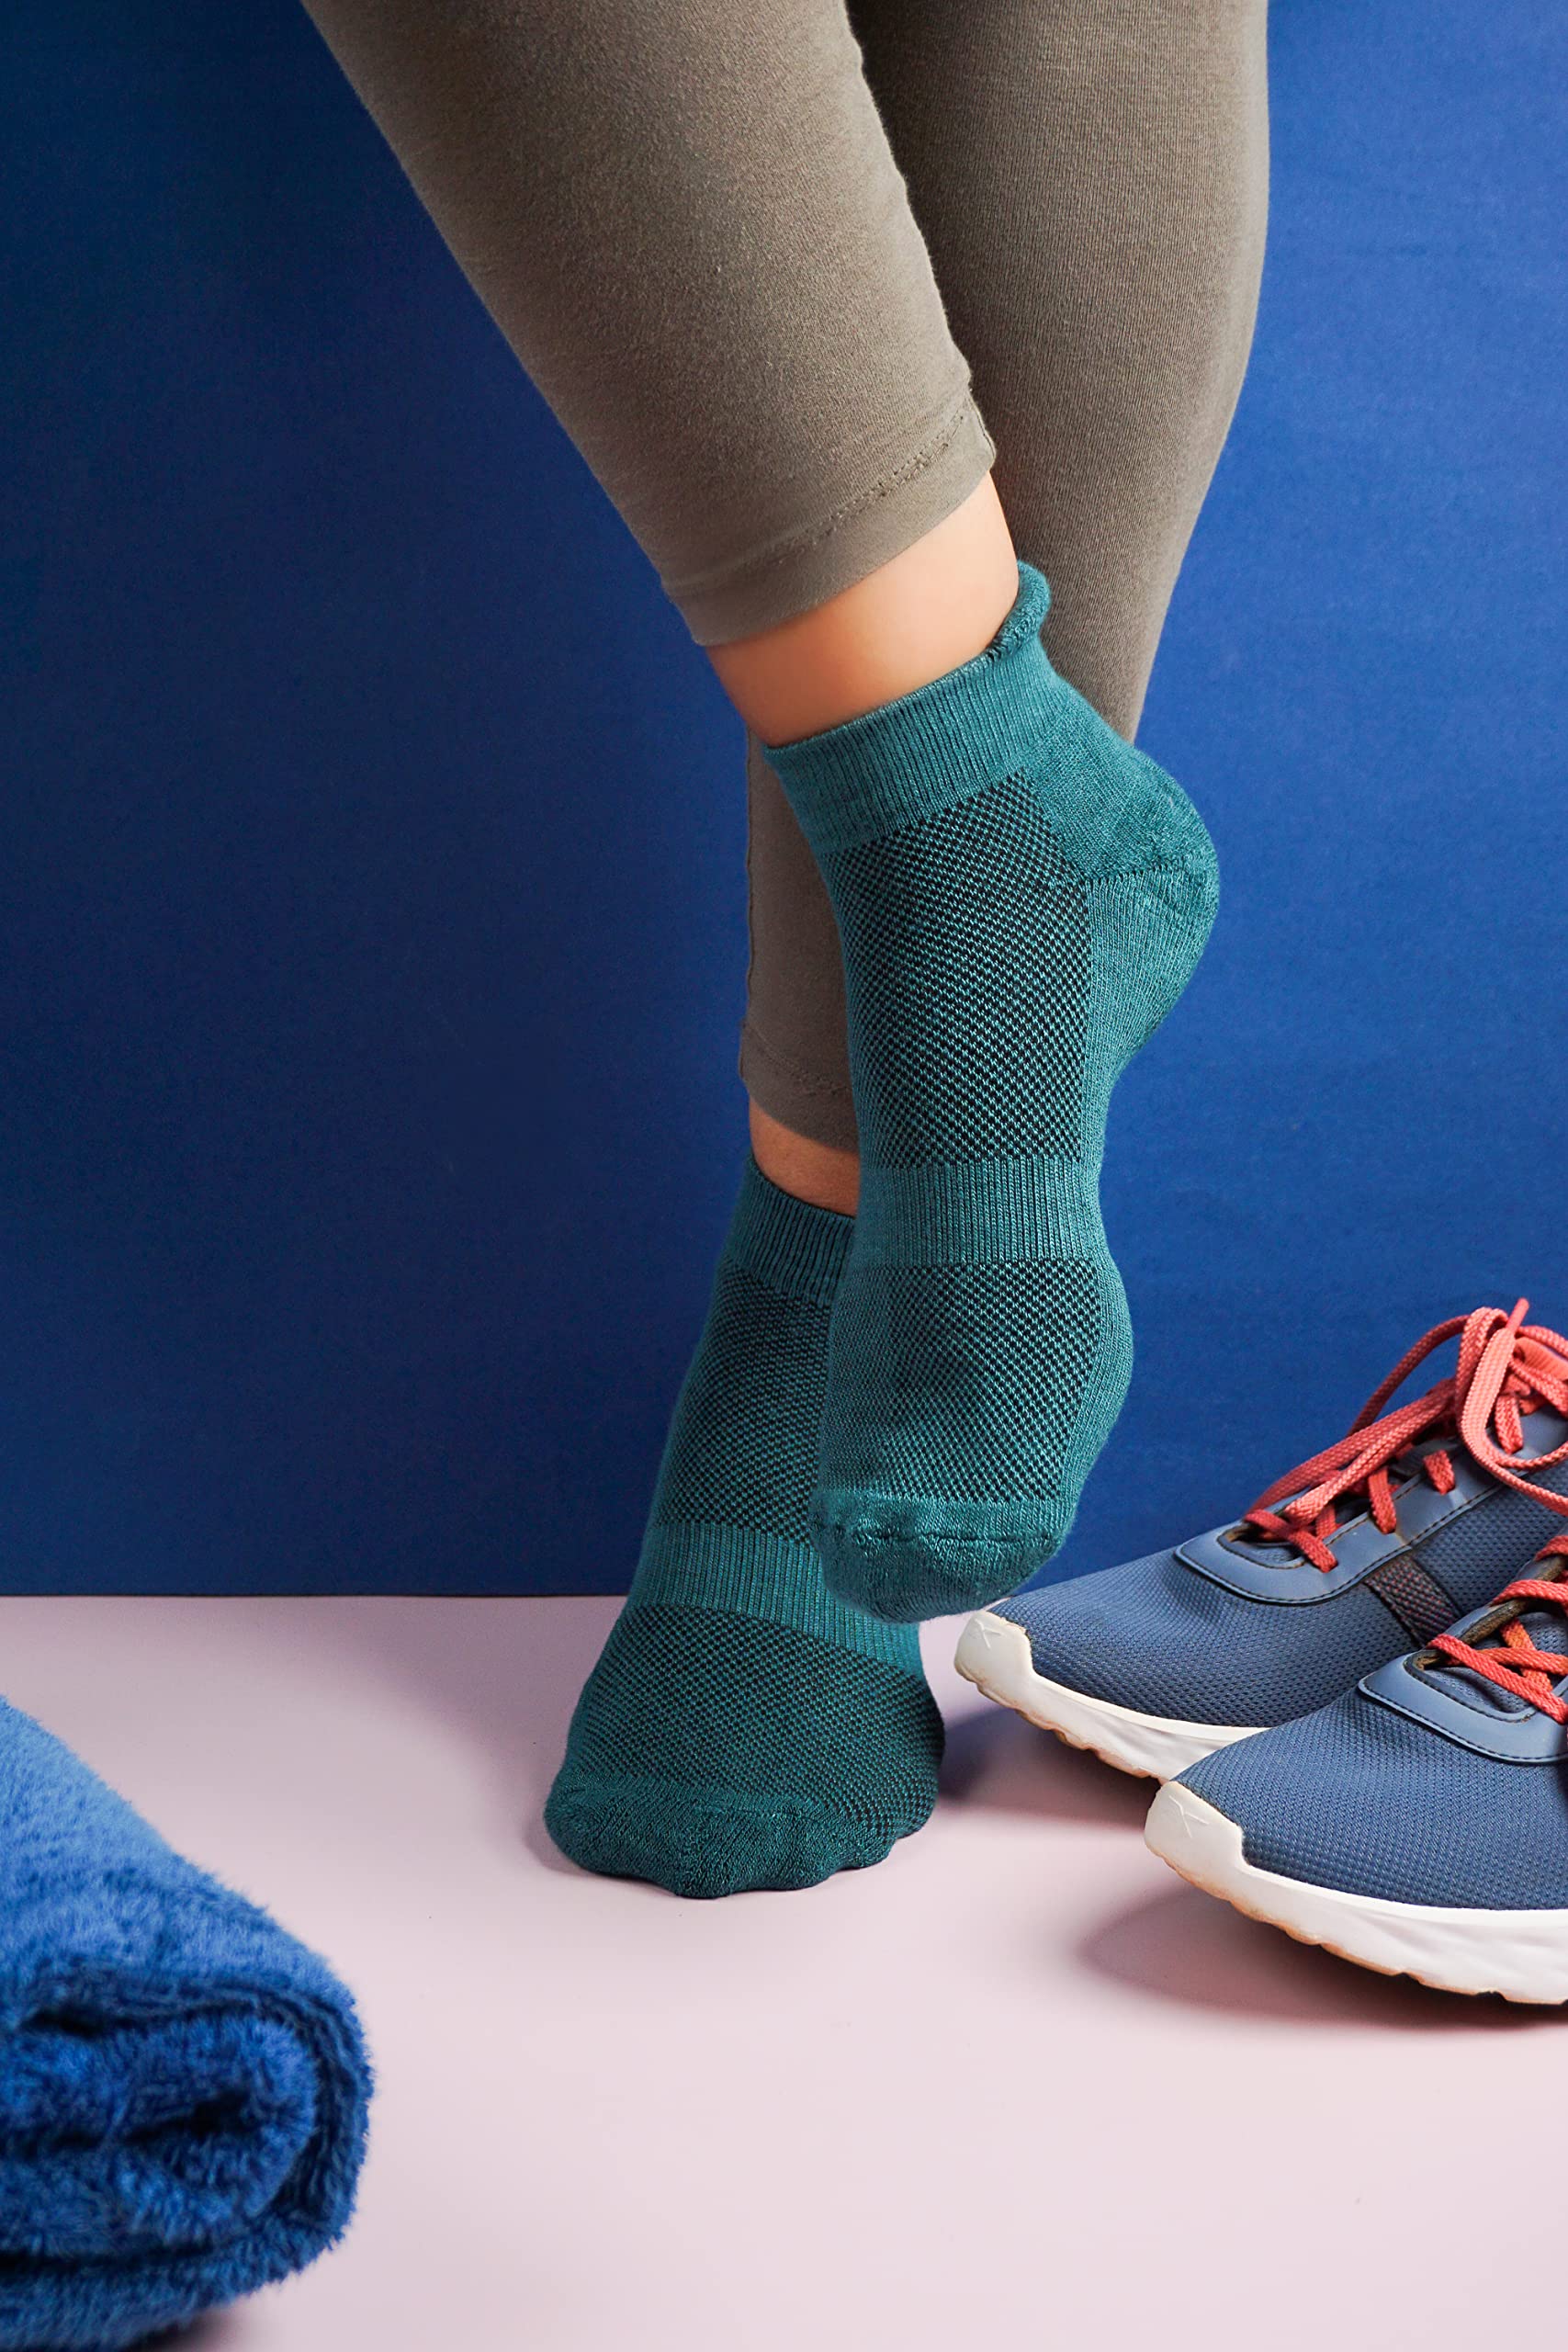 Mush Bamboo Ultra Soft, Anti Odor, Breathable, Anti Blister Ankle Socks for Men & Women for Running, Sports & Gym (Pack of 3) (Aqua Blue,Dark Grey,Charcoal Green)